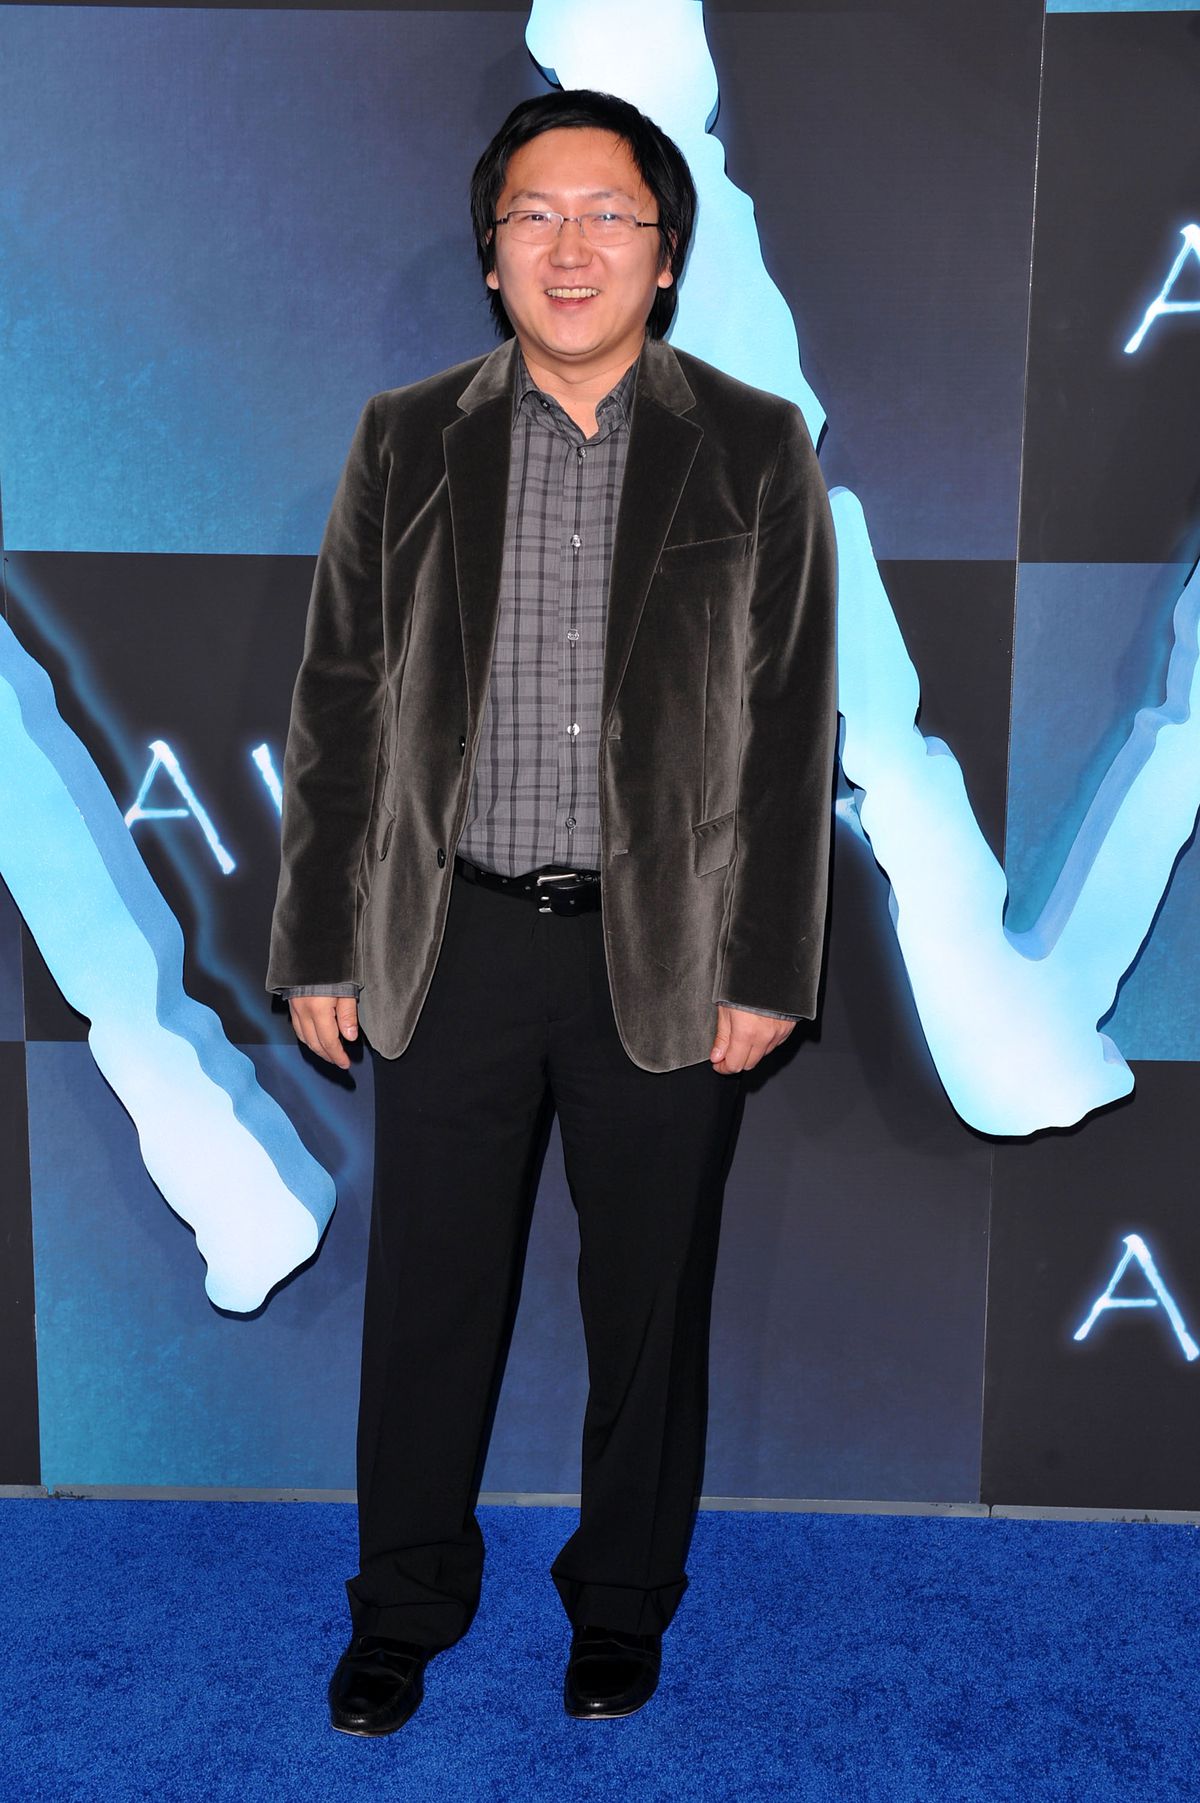 Maki Osa wearing a tweed jacket at the Avatar premiere